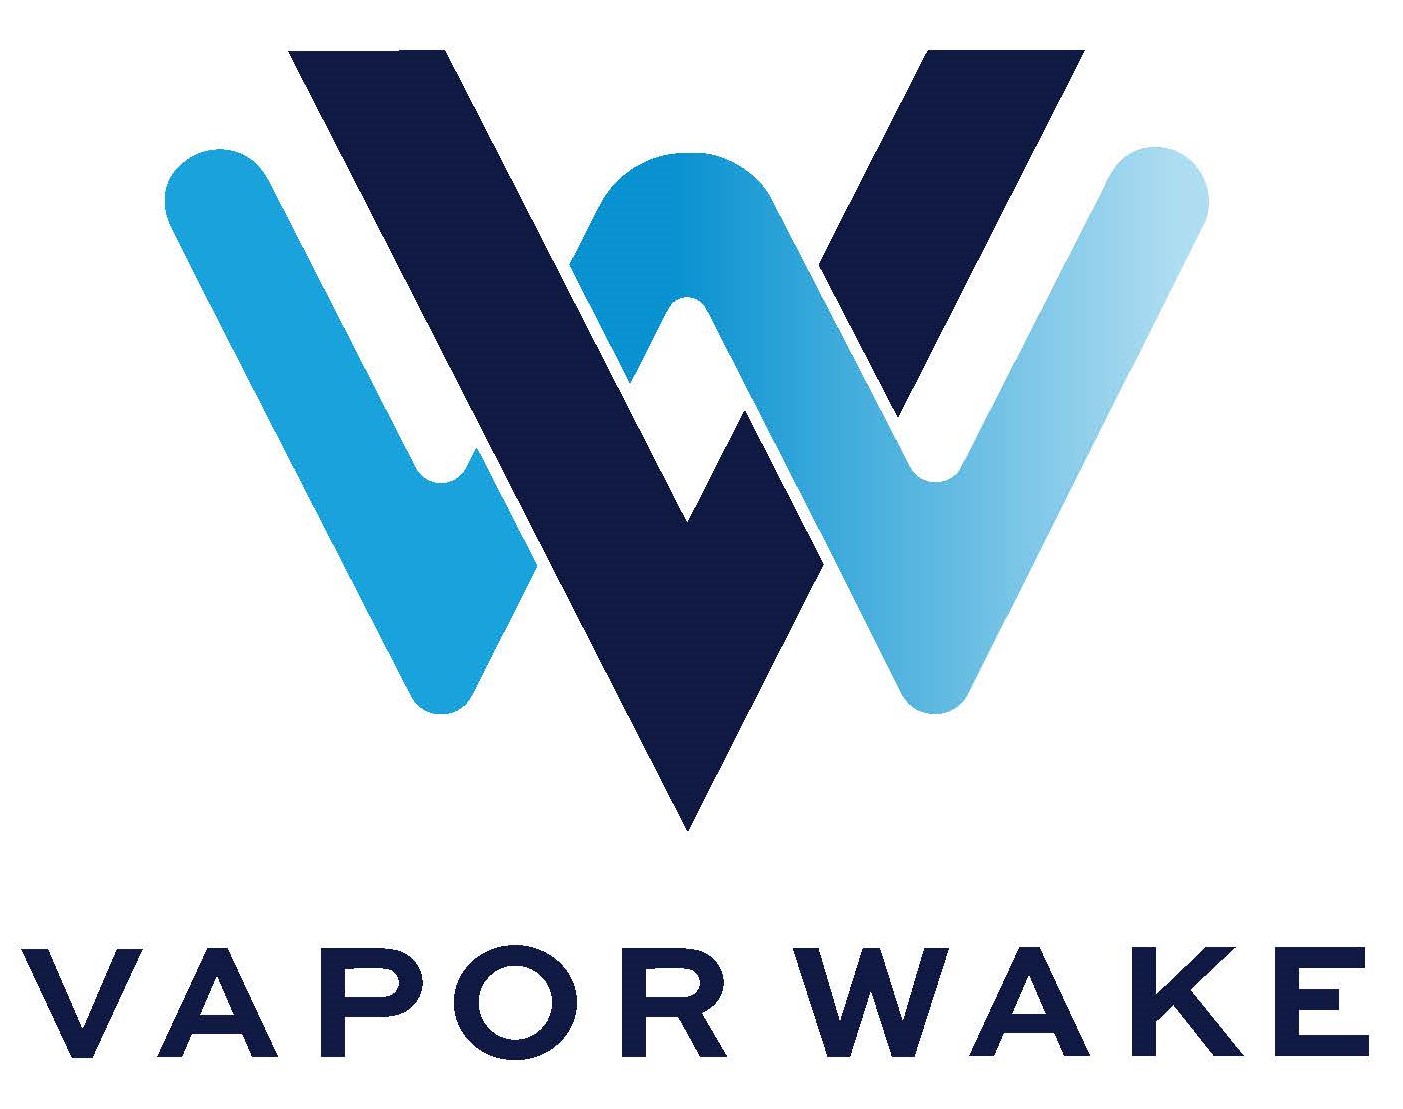 Vapor Wake trademark